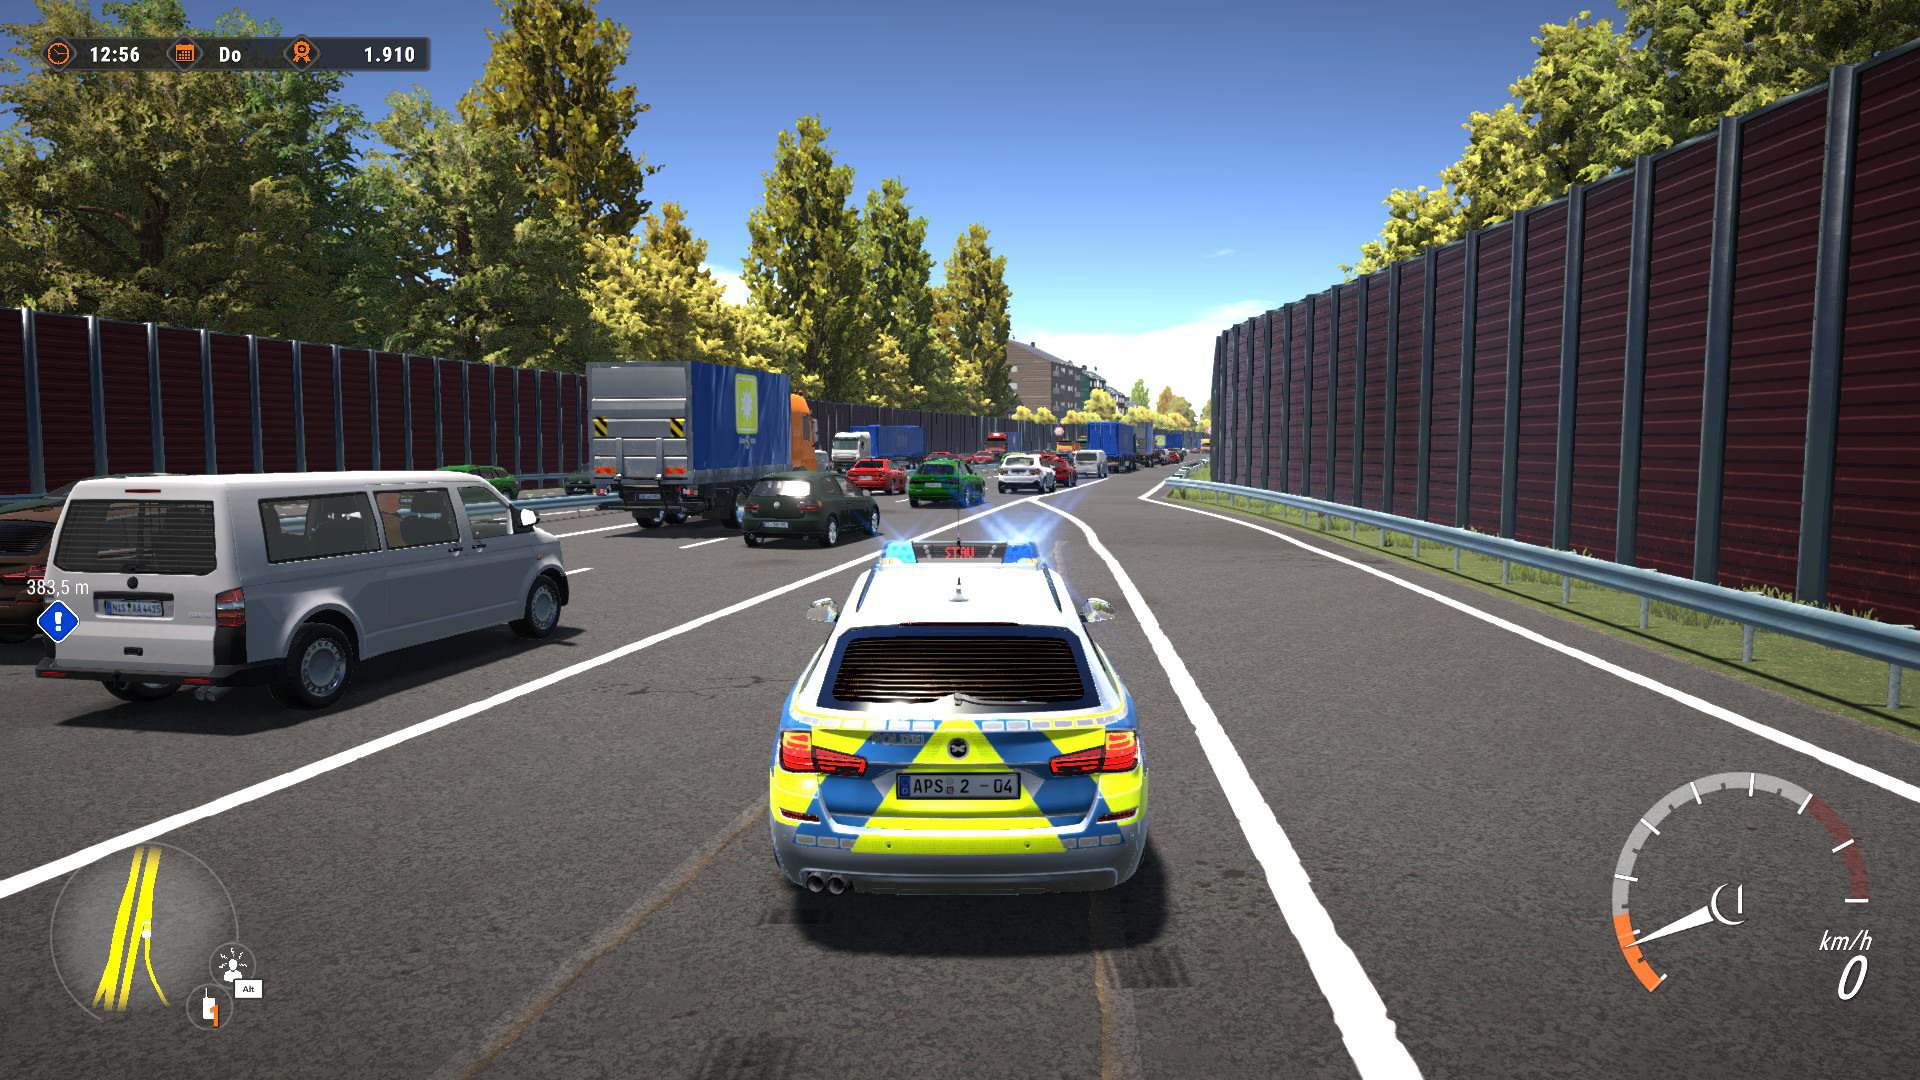 Autobahn Police Simulator 2 - screenshot 2